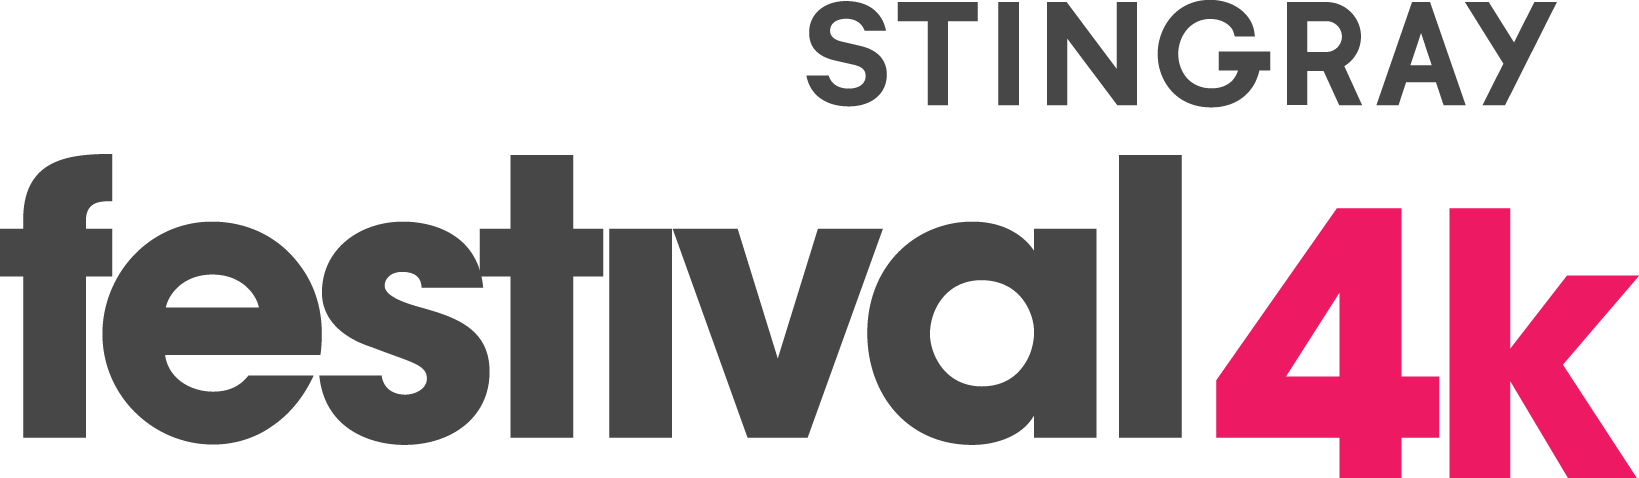 Logo STINGRAY festival 4k